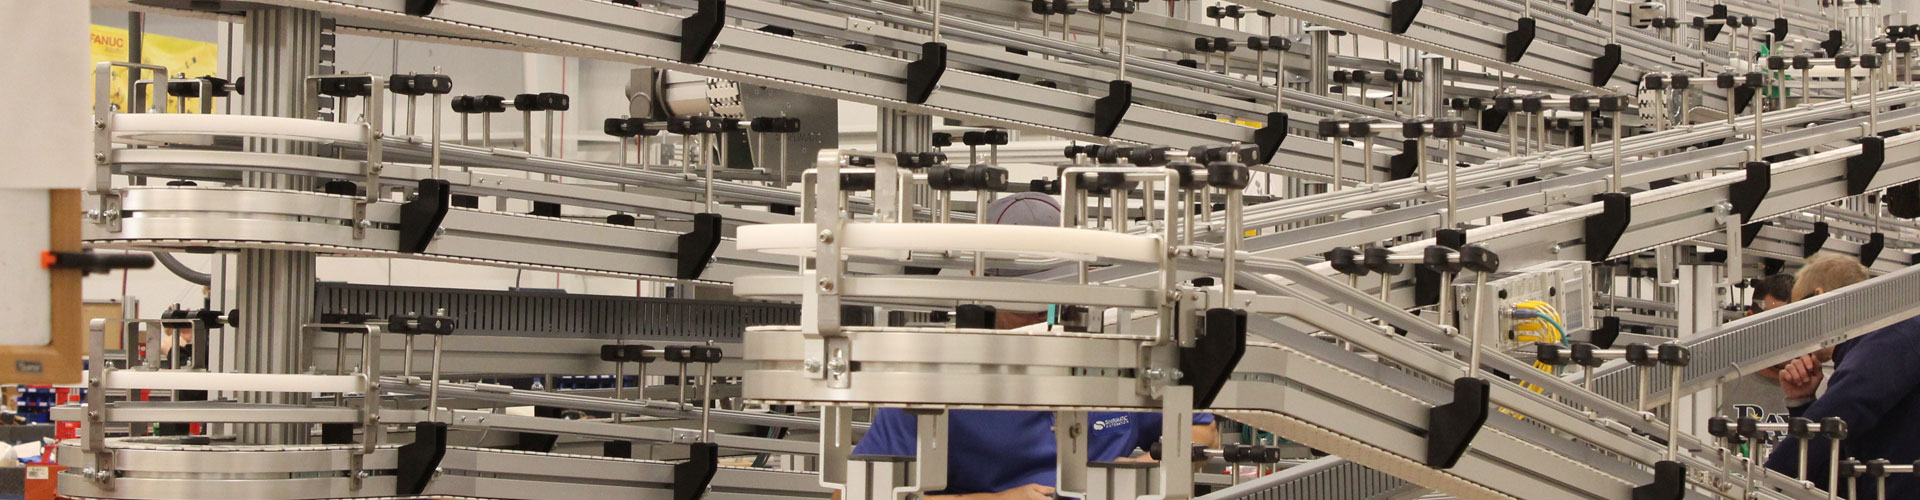 Multi-Level Manufacturing Conveyor